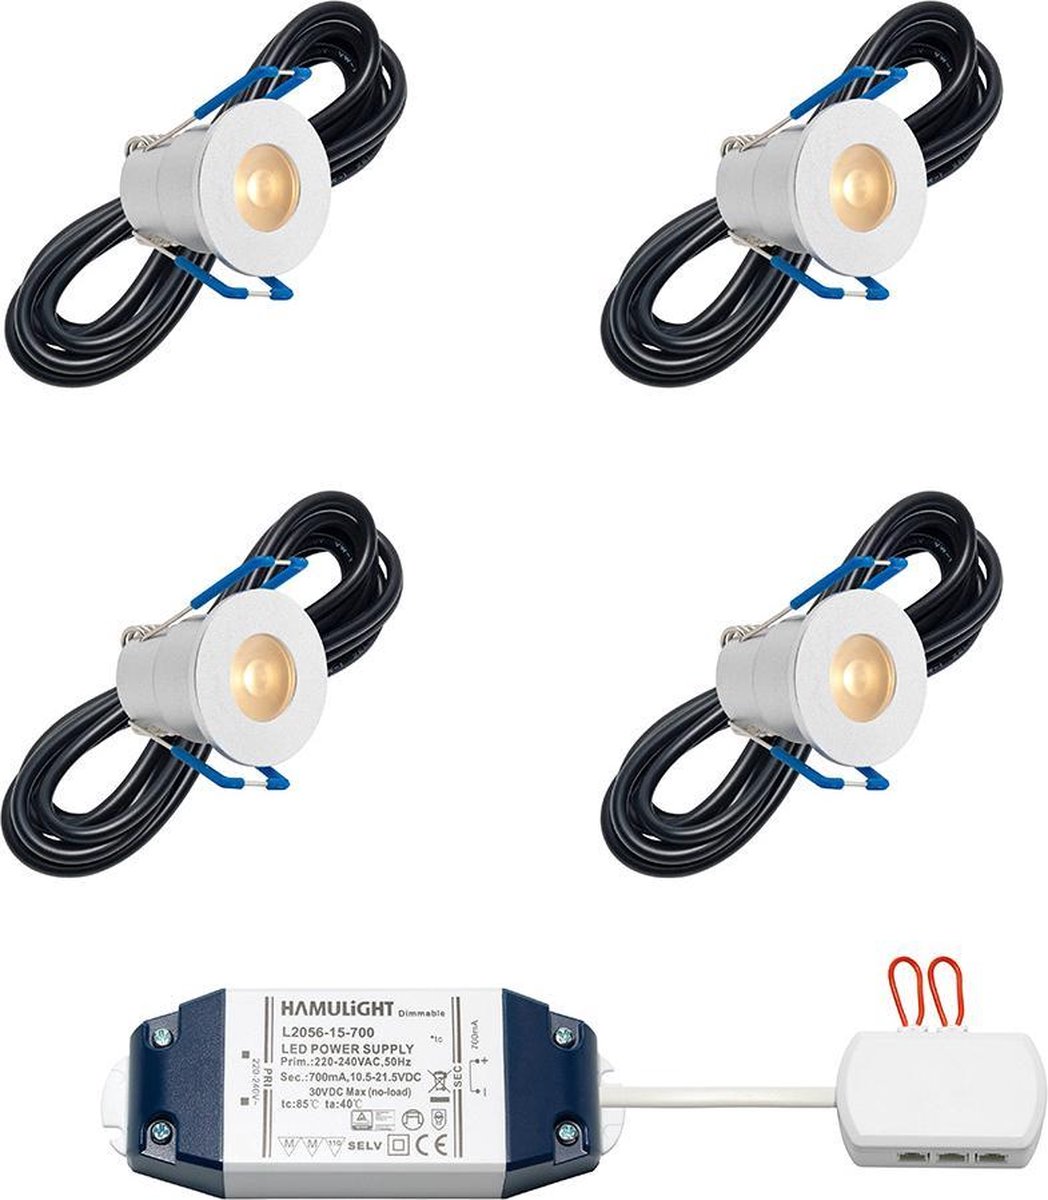 LED inbouwspot Valencia bas inclusief trafo - inbouwspots / downlights / plafondspots / led spot / 3W / dimbaar / warm wit / rond / 230V / IP65 / - set van 4 stuks